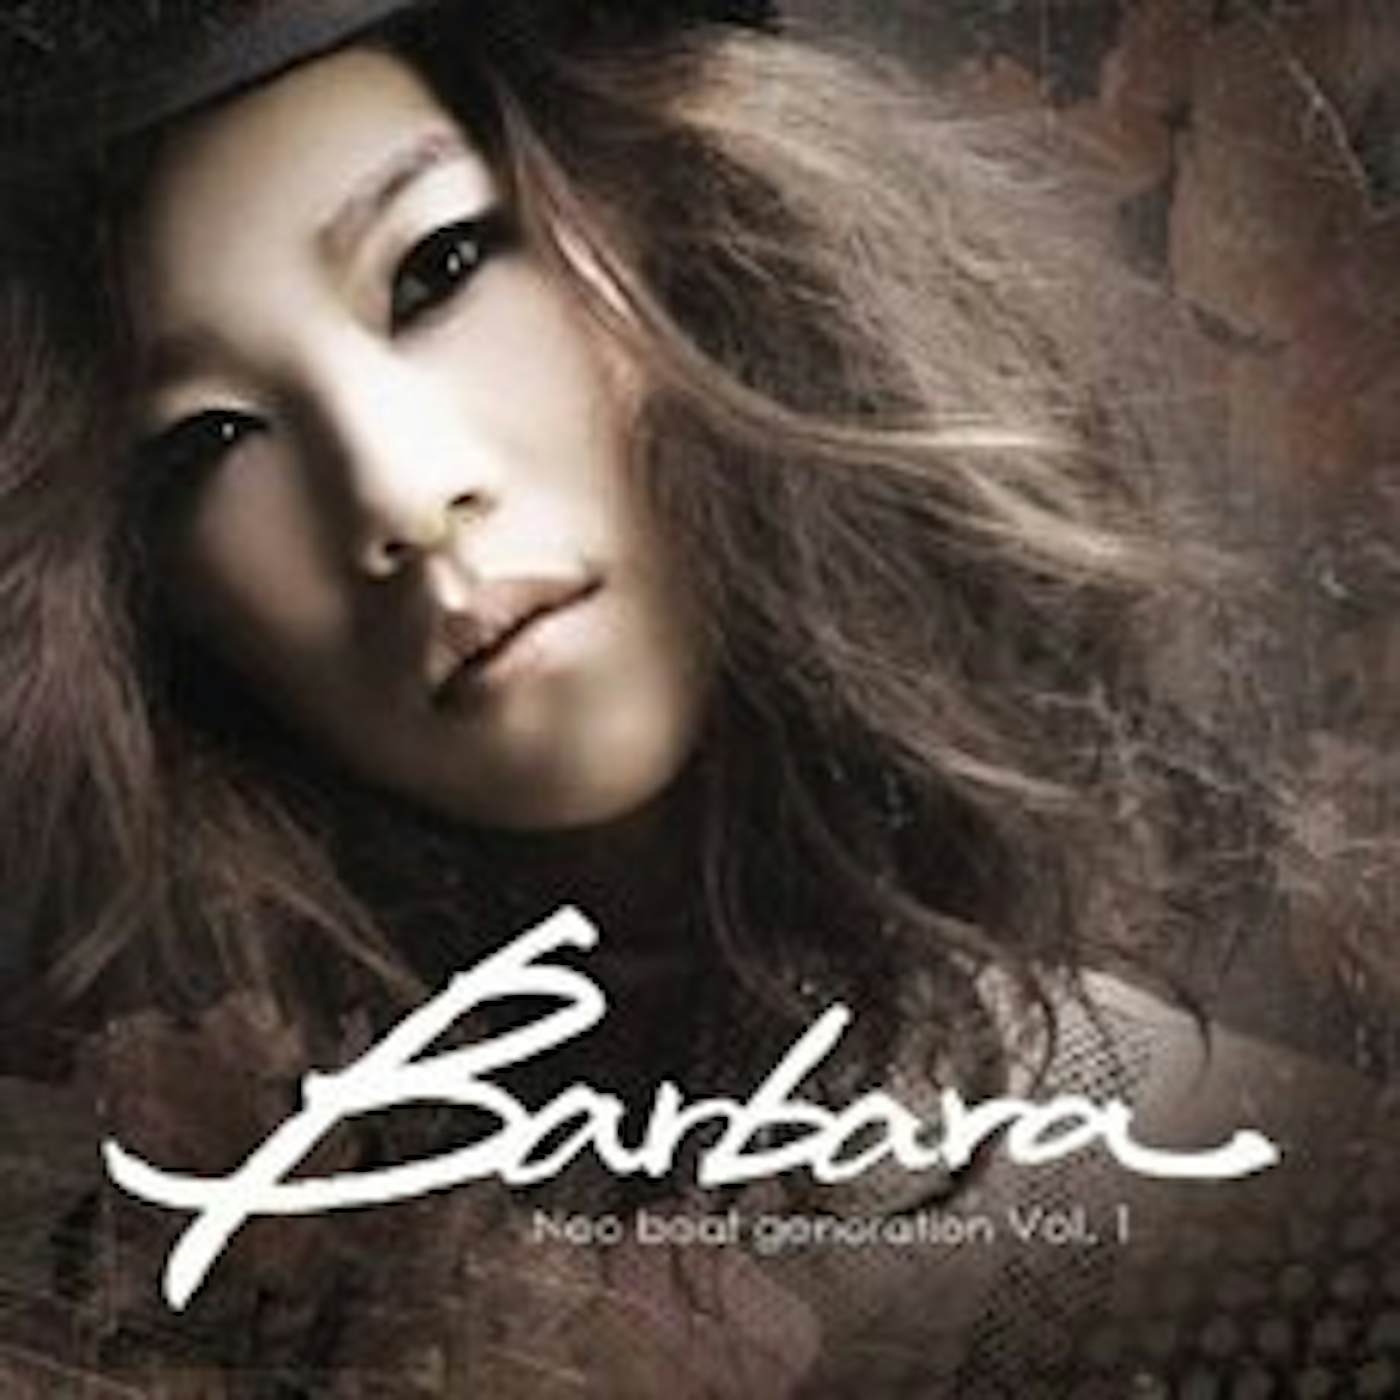 Barbara NEO BEAT GENERATION CD